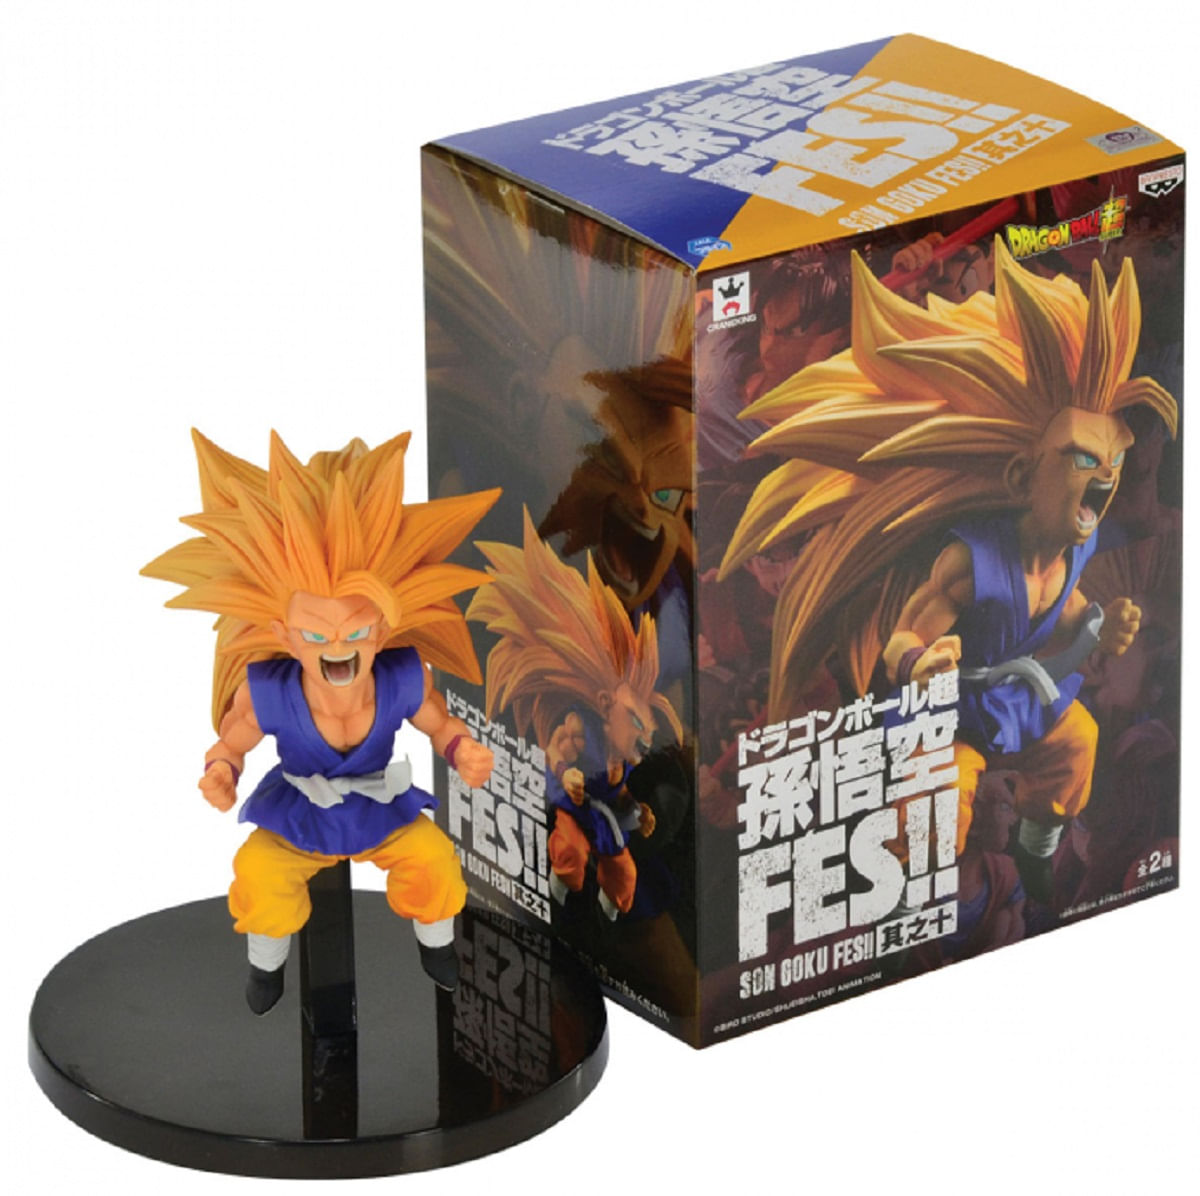 Boneco Goku Super Sayajin 3 Dragon Ball Z C/caixa Oferta